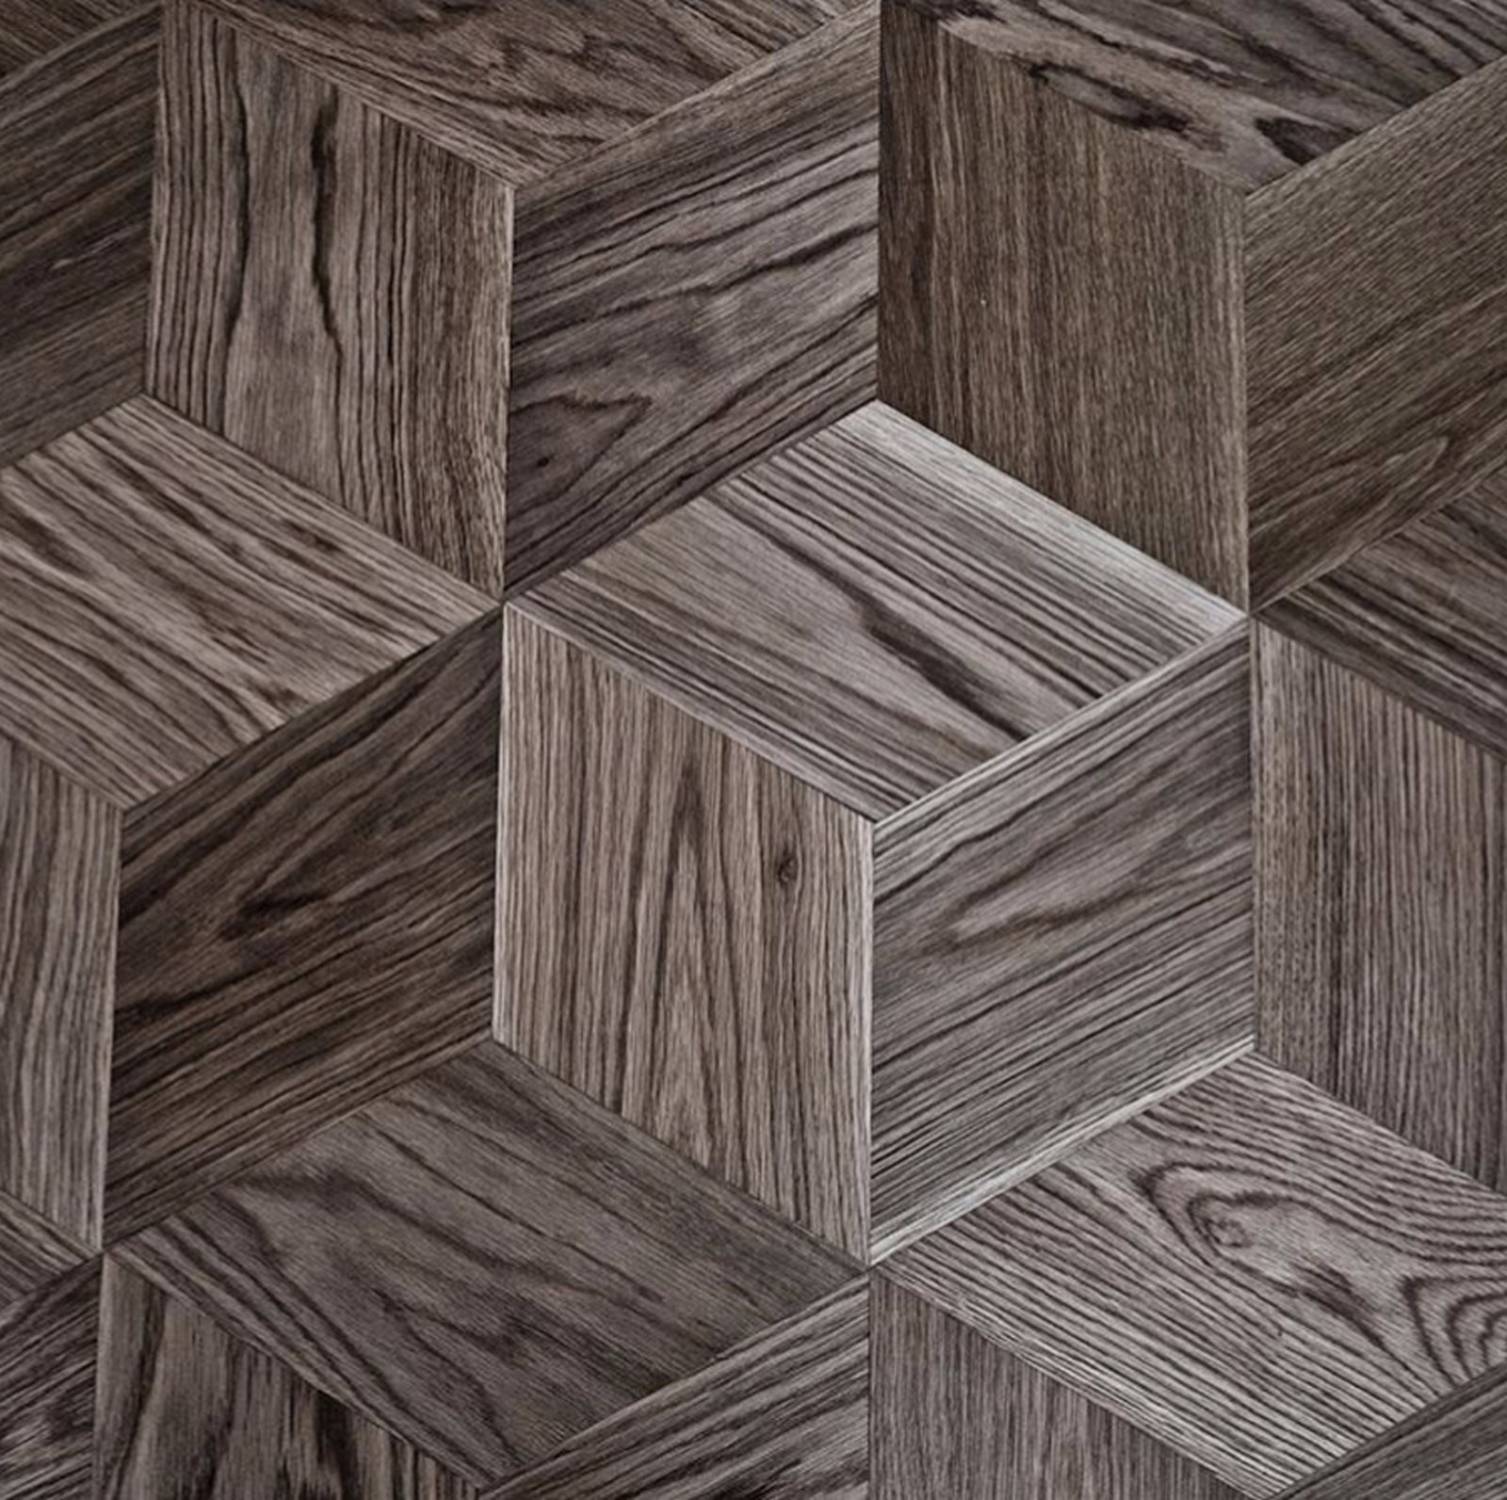 Hexparket solid oak flooring  - Hexagonal Parquet Flooring